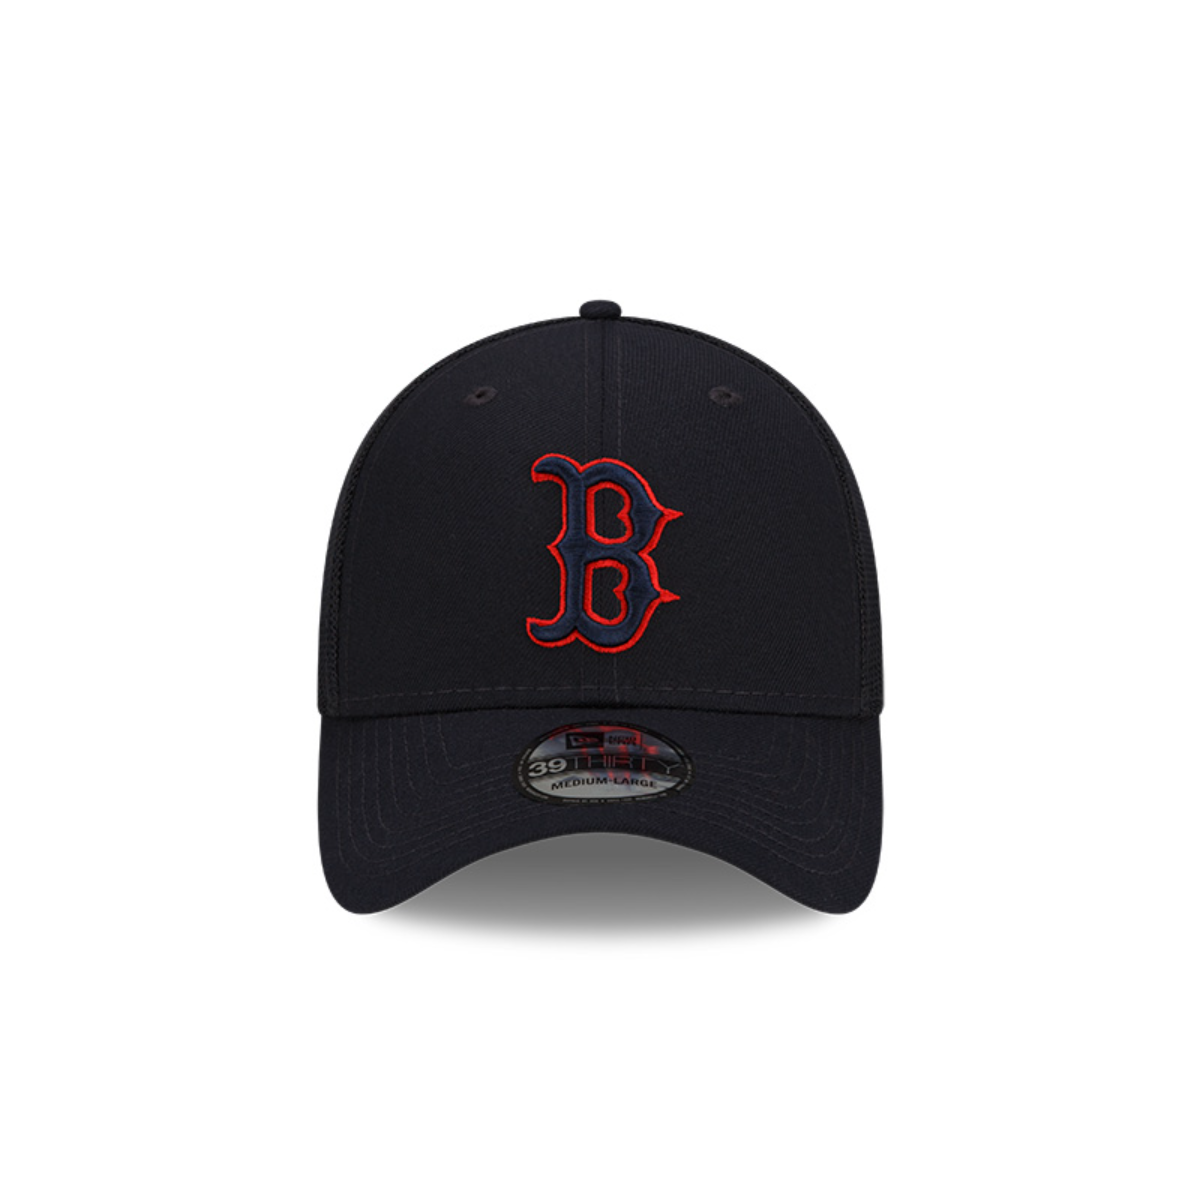 Gorra MLB BATTING PRACTICE 39THIRTY Cerrada / New Era - Boston Red Sox